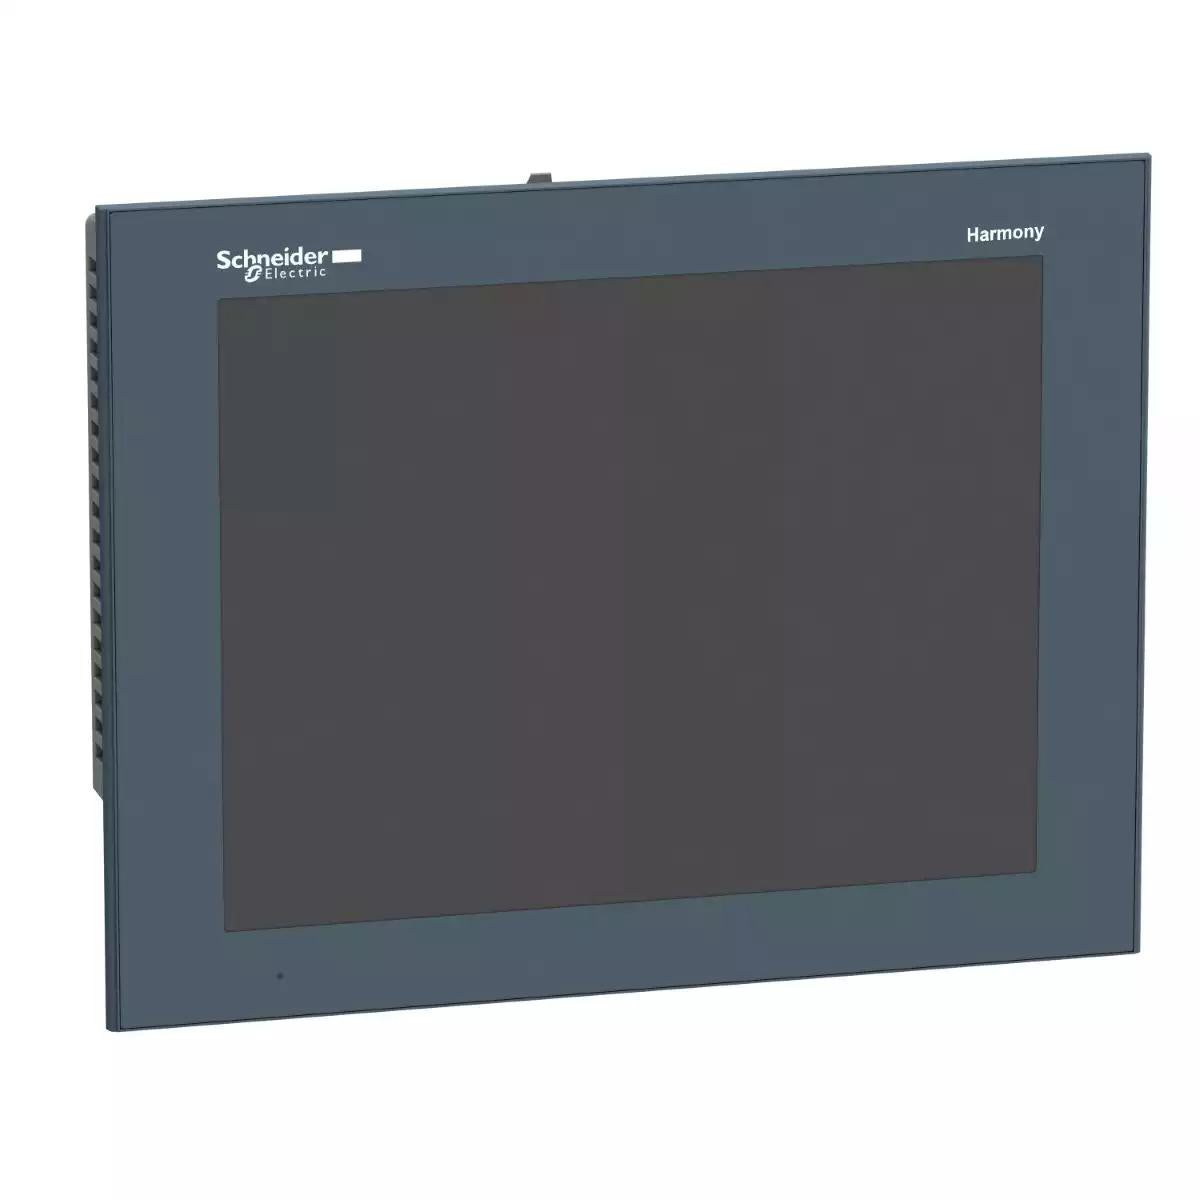 advanced touchscreen panel 800 x 600 pixels SVGA- 12.1